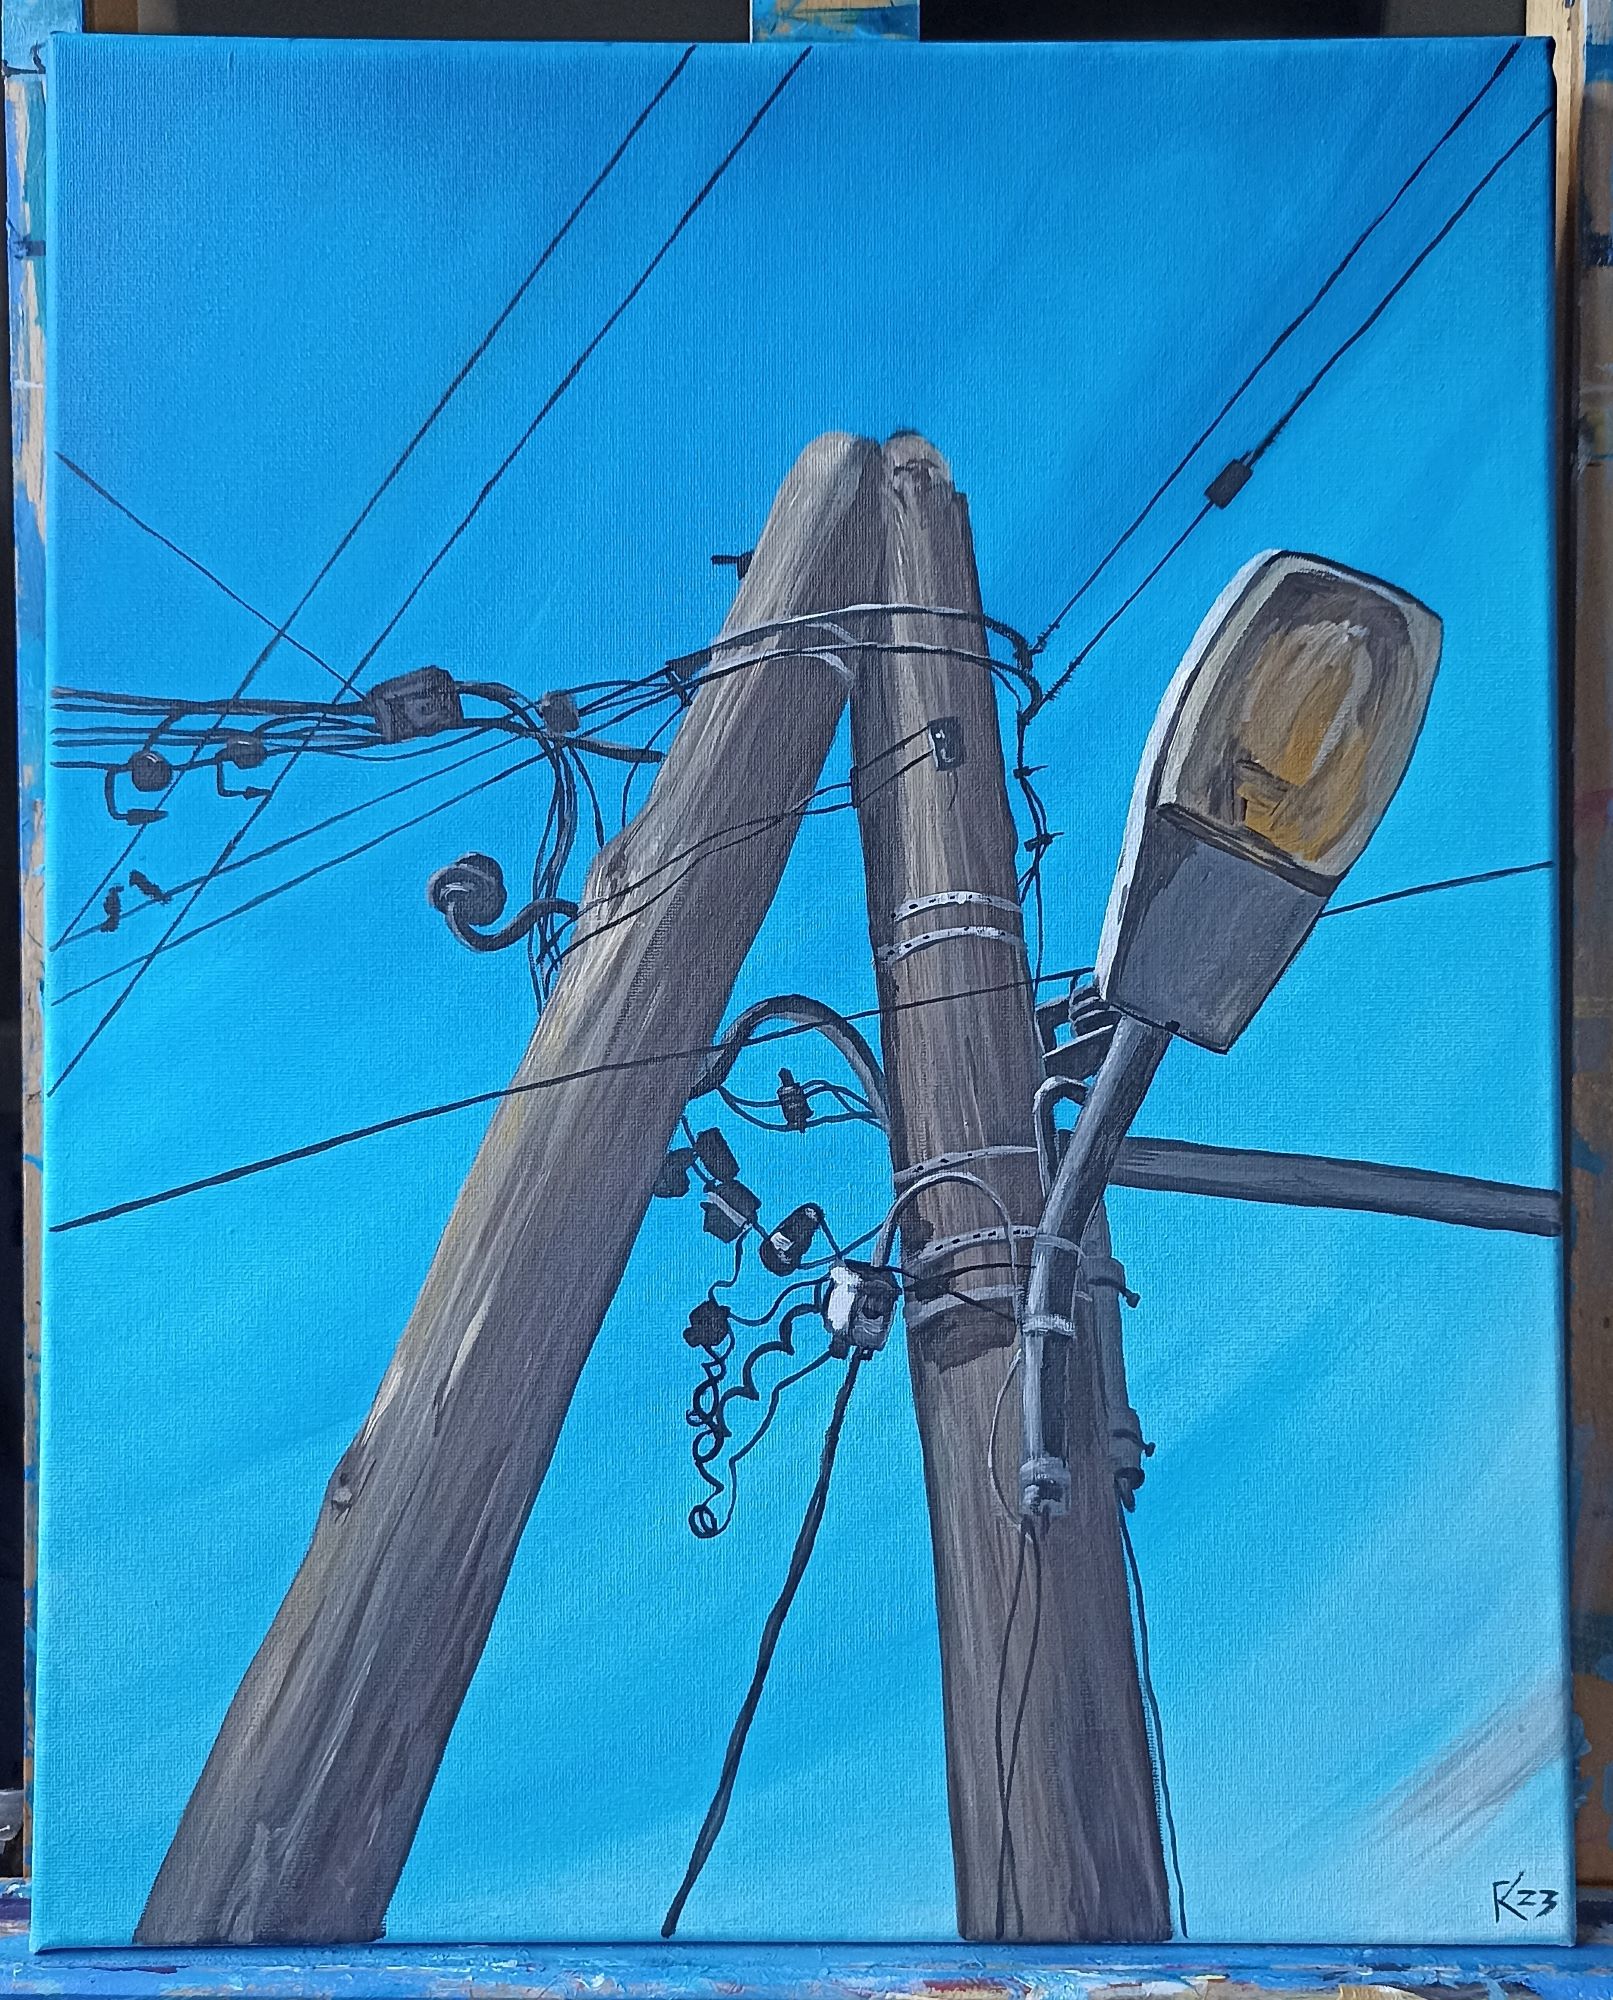 Electrical Pole